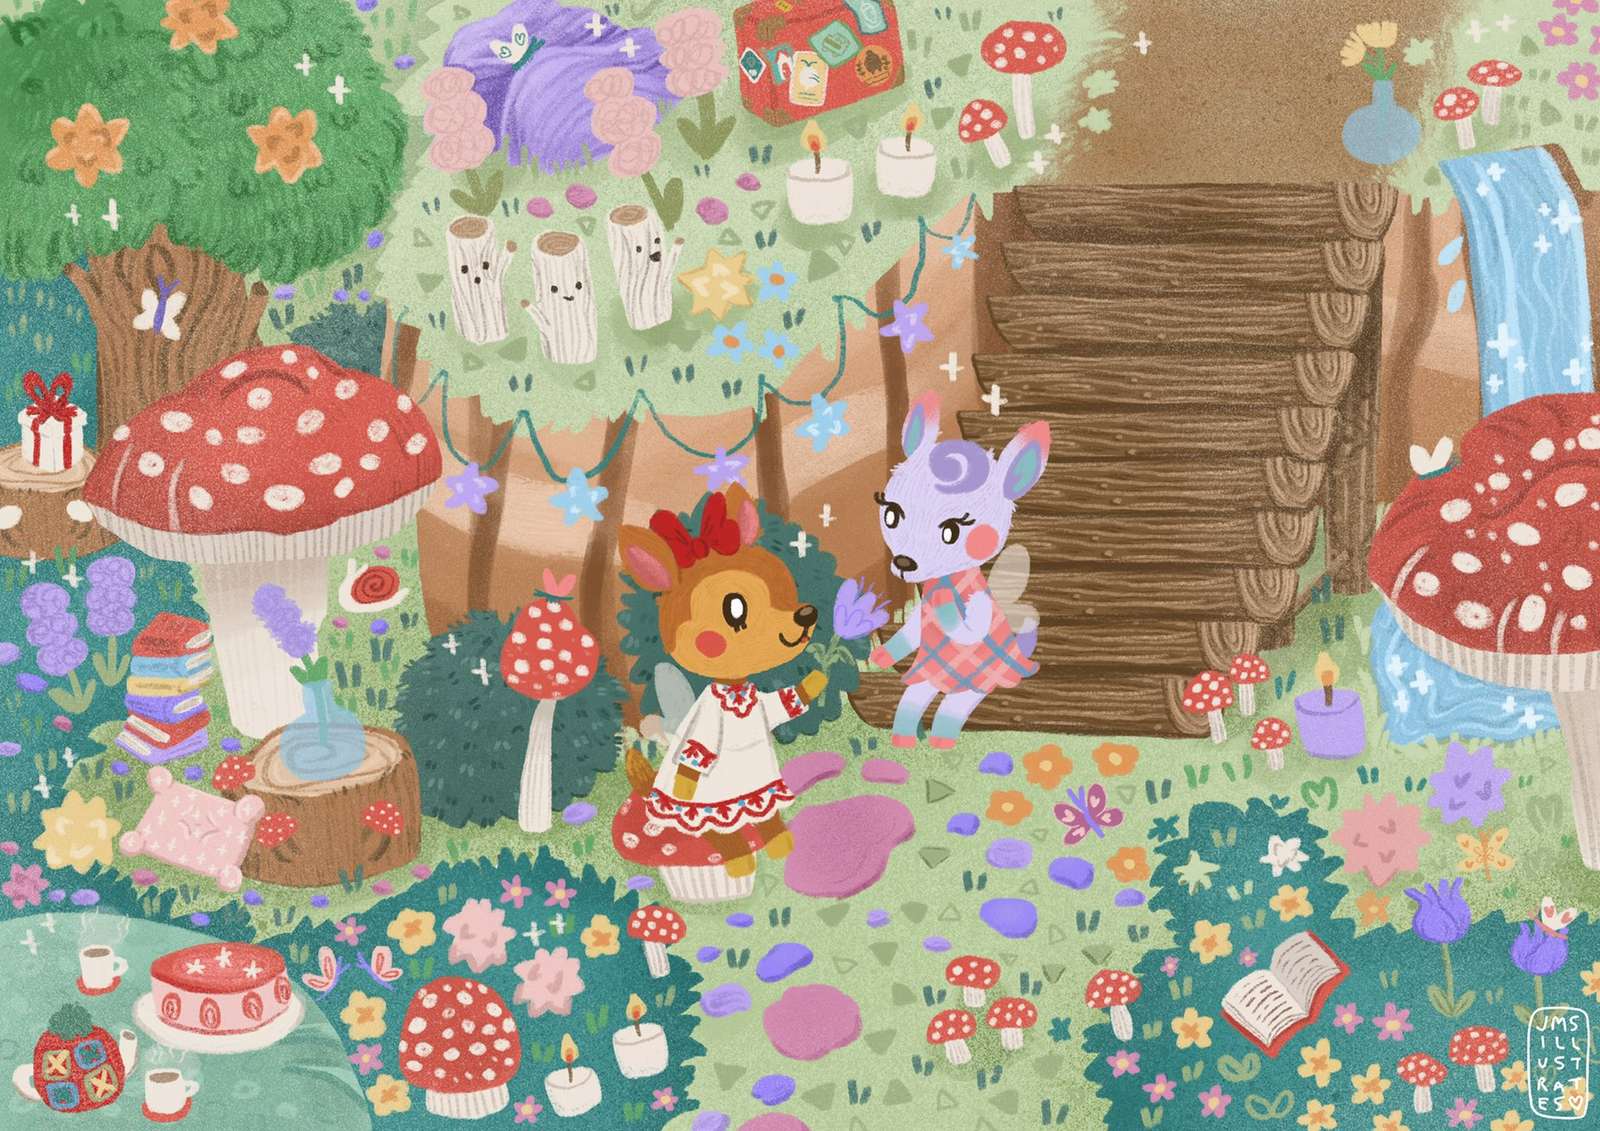 Fauna & Diana Art (Animal Crossing New Horizon) Online-Puzzle vom Foto